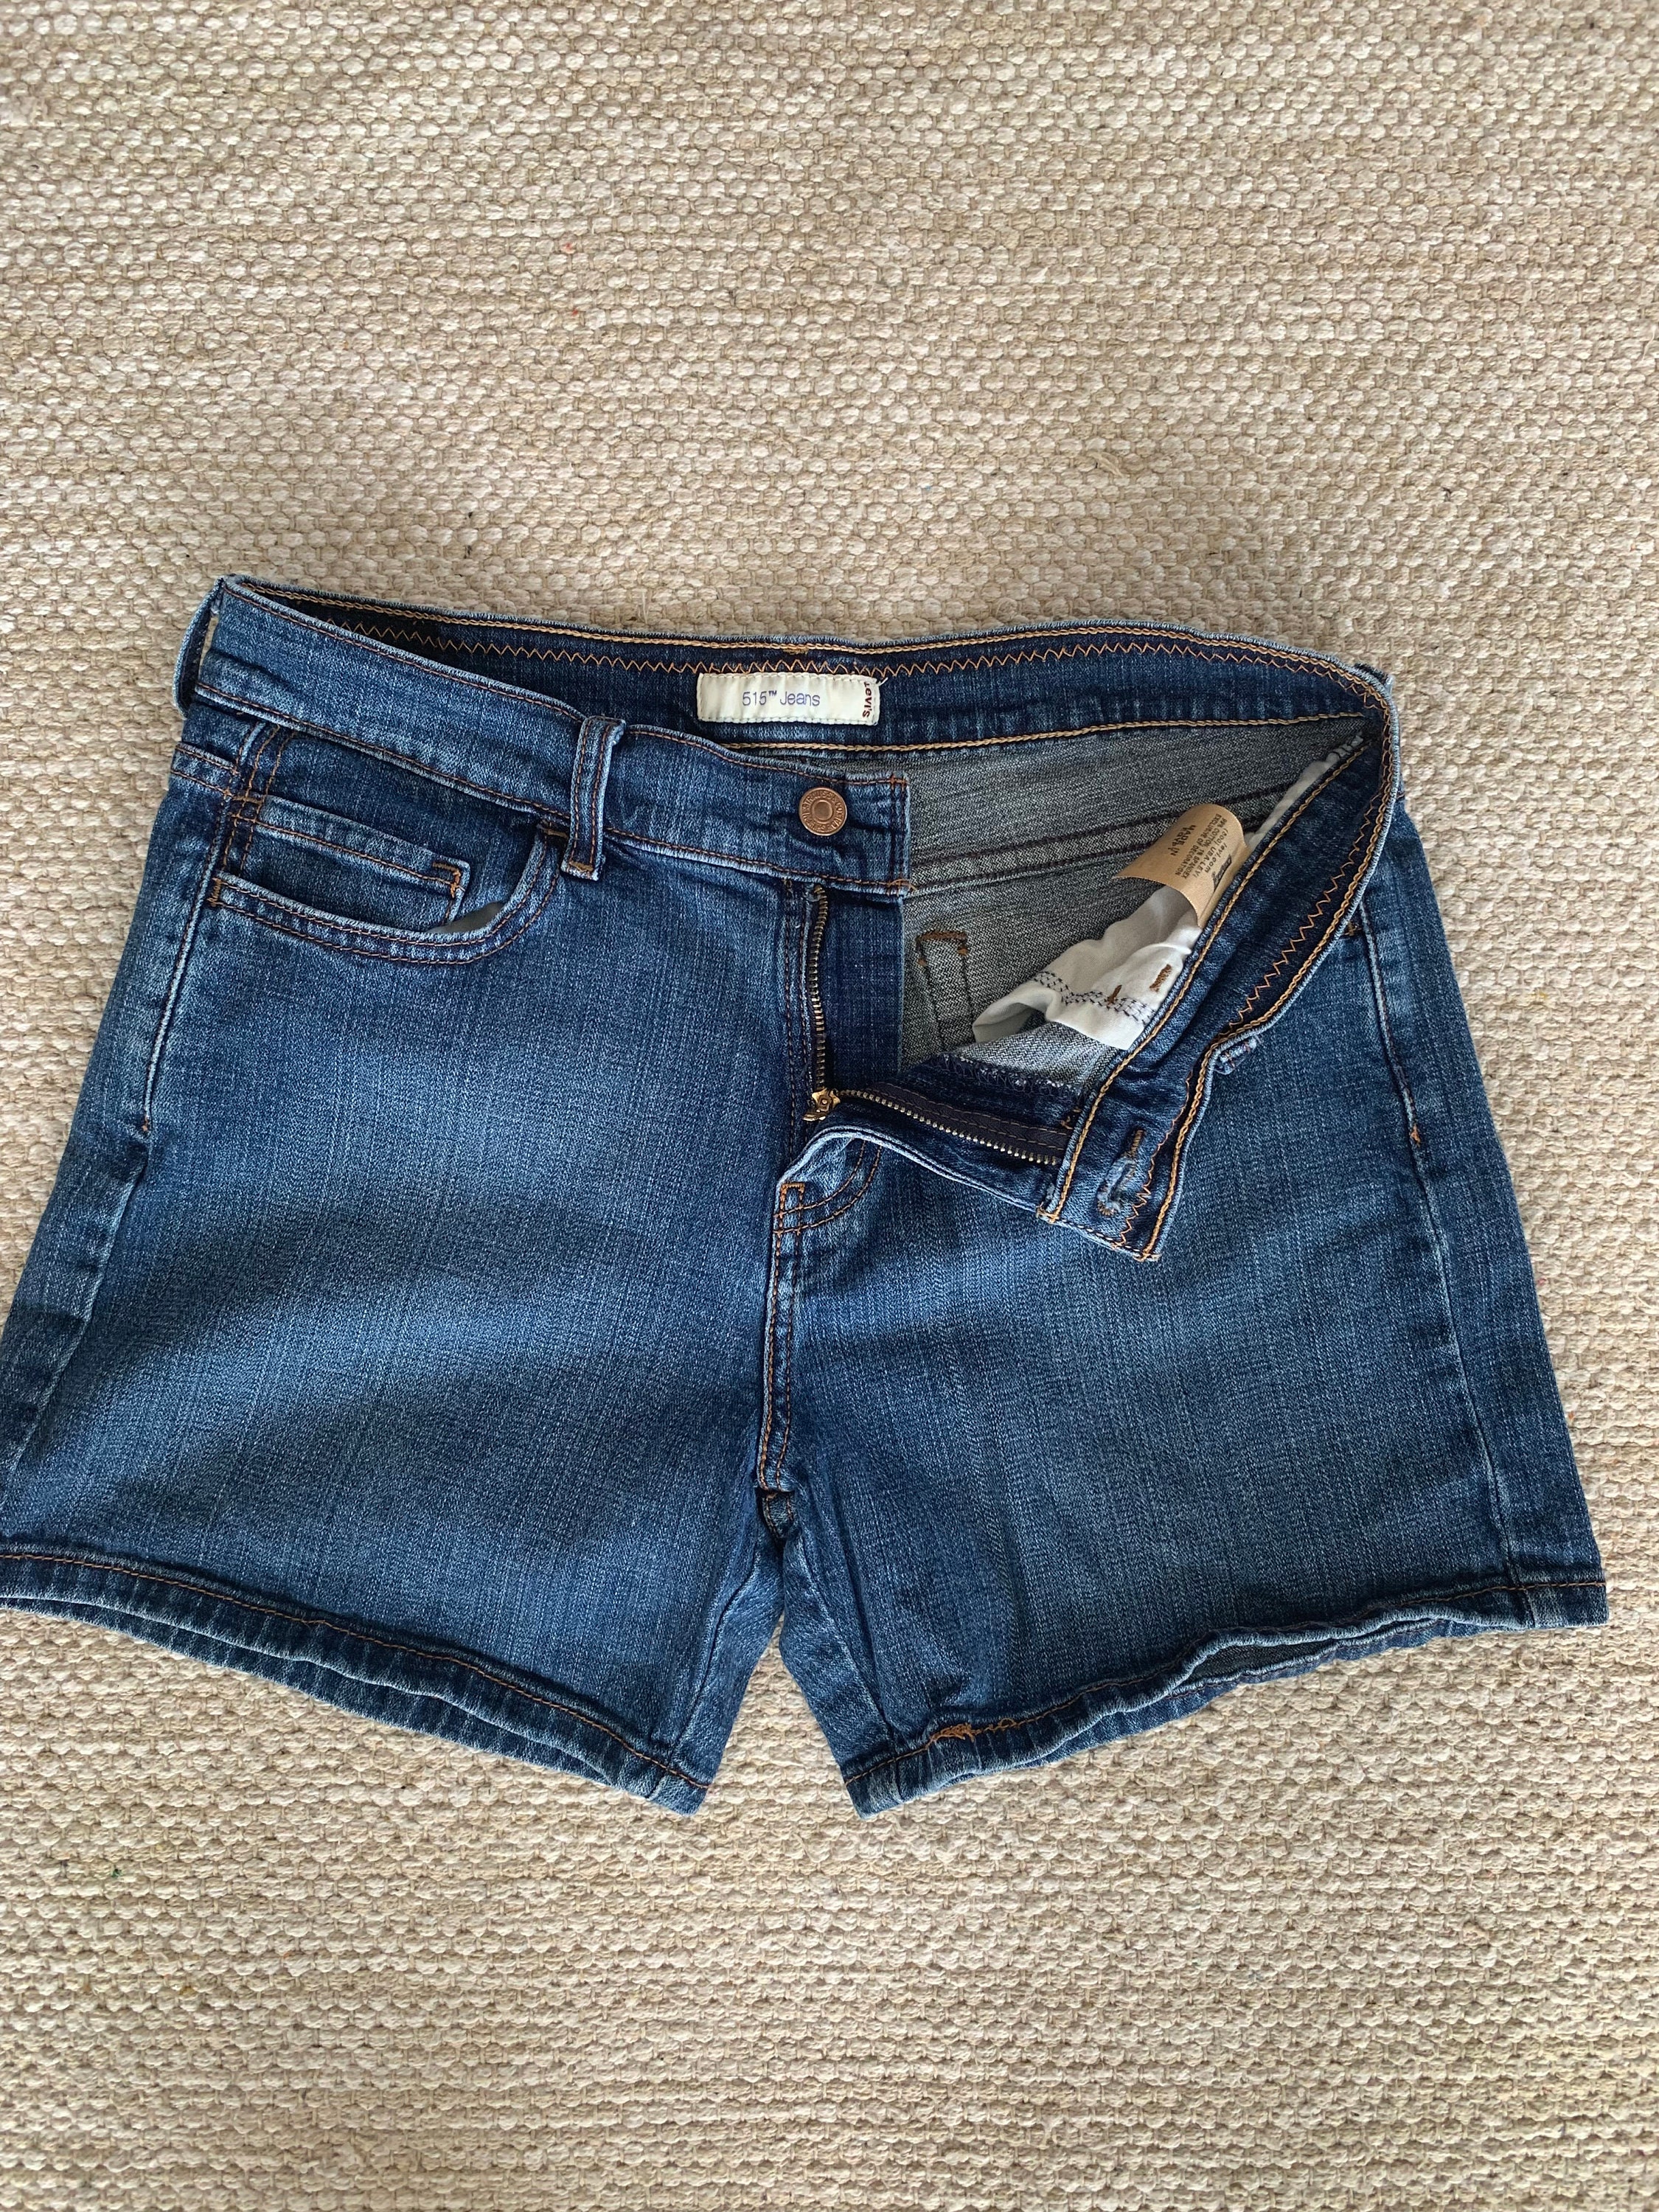 Vintage Levi's 515 Denim Jean Shorts Size 8 - Etsy Australia